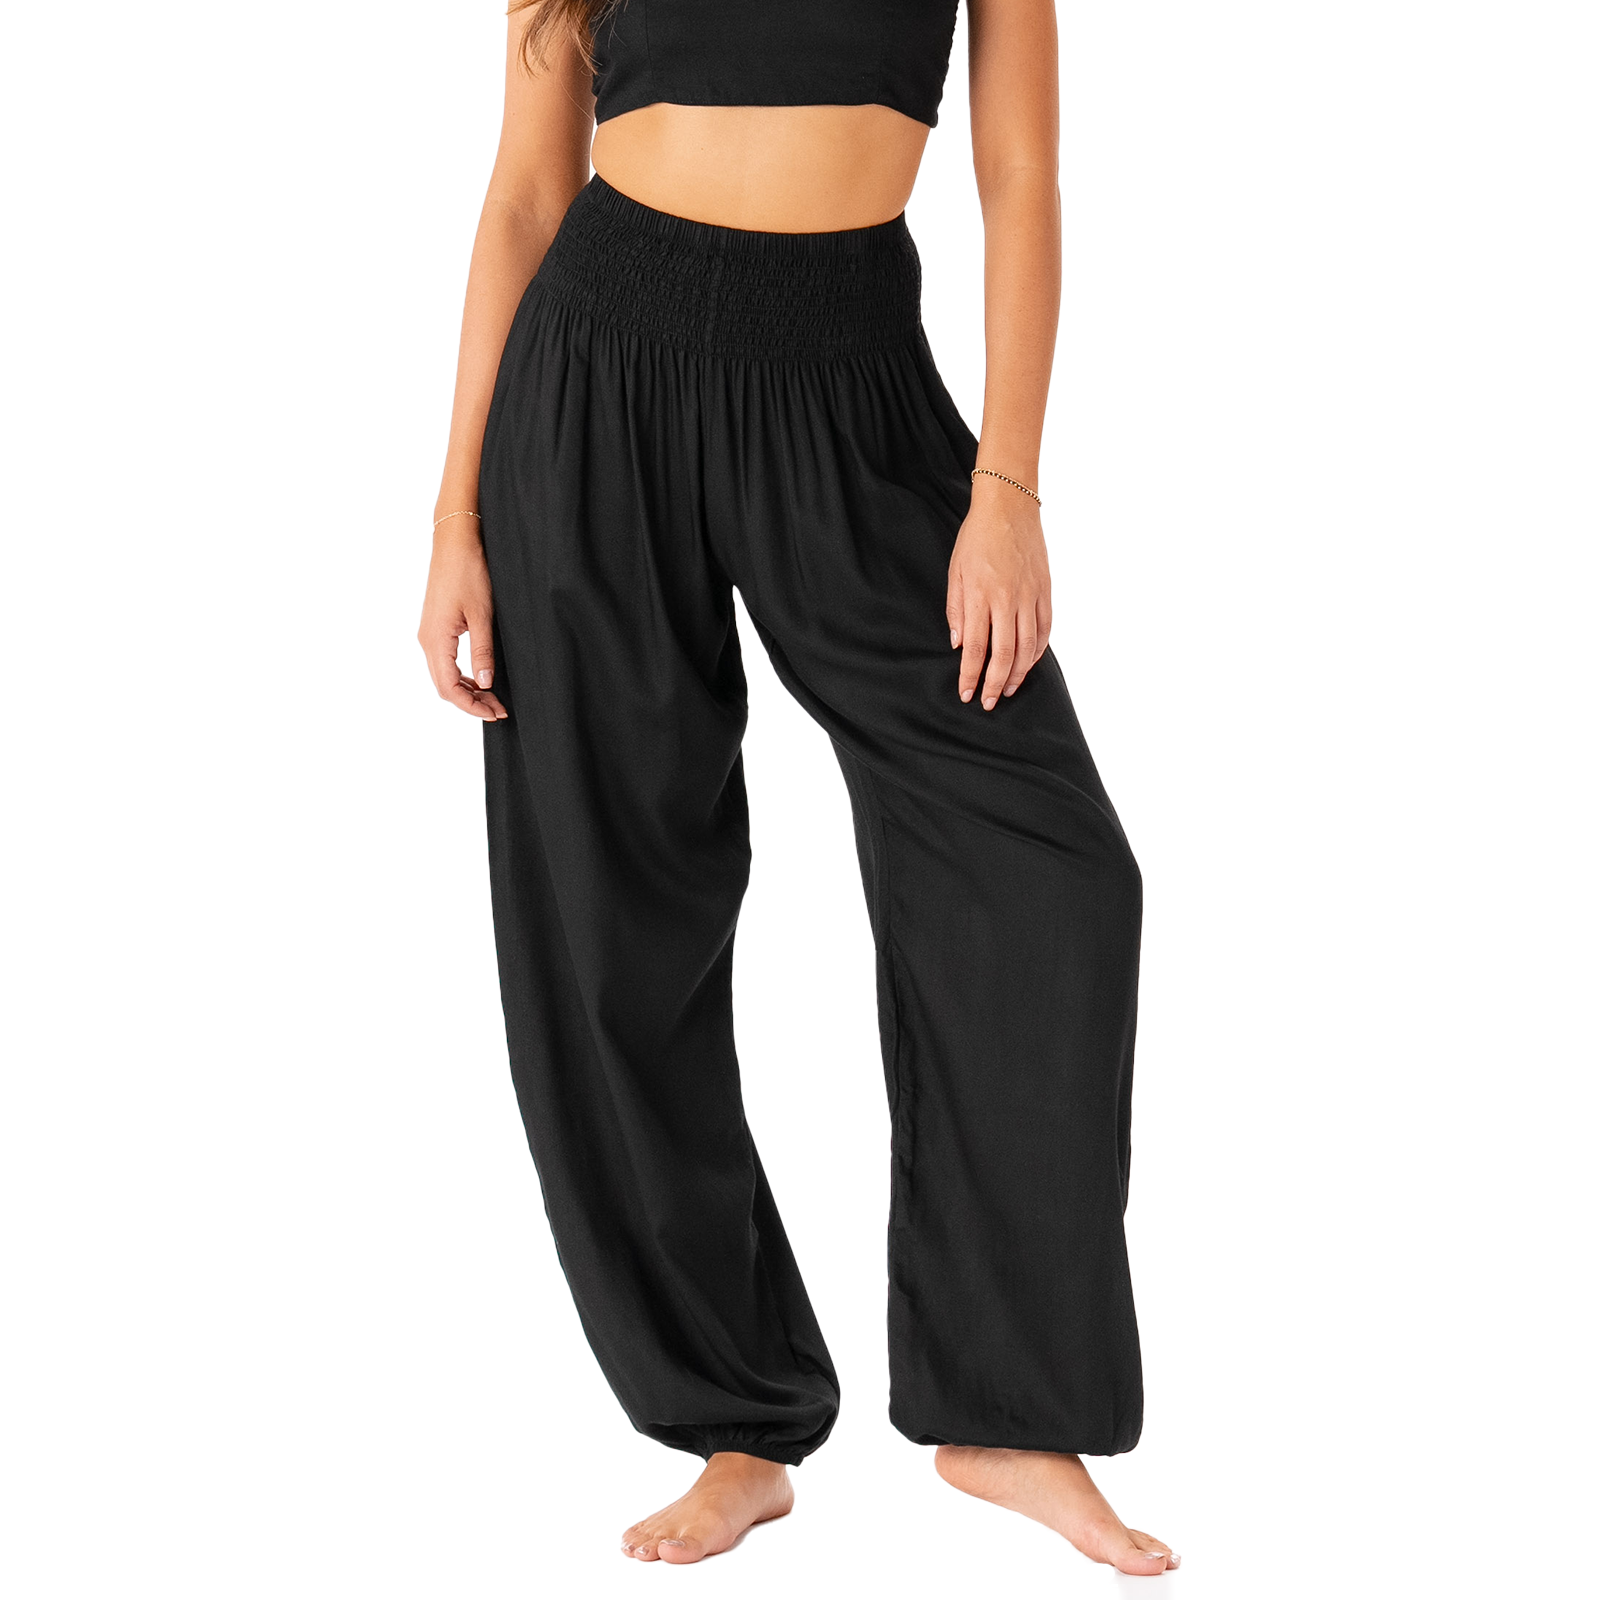 Black Boho Pants for Women Flowy Yoga Pants Small to Plus Sizes Harem Pants  Long Thai Pants Baggy Summer Pants for Beach 